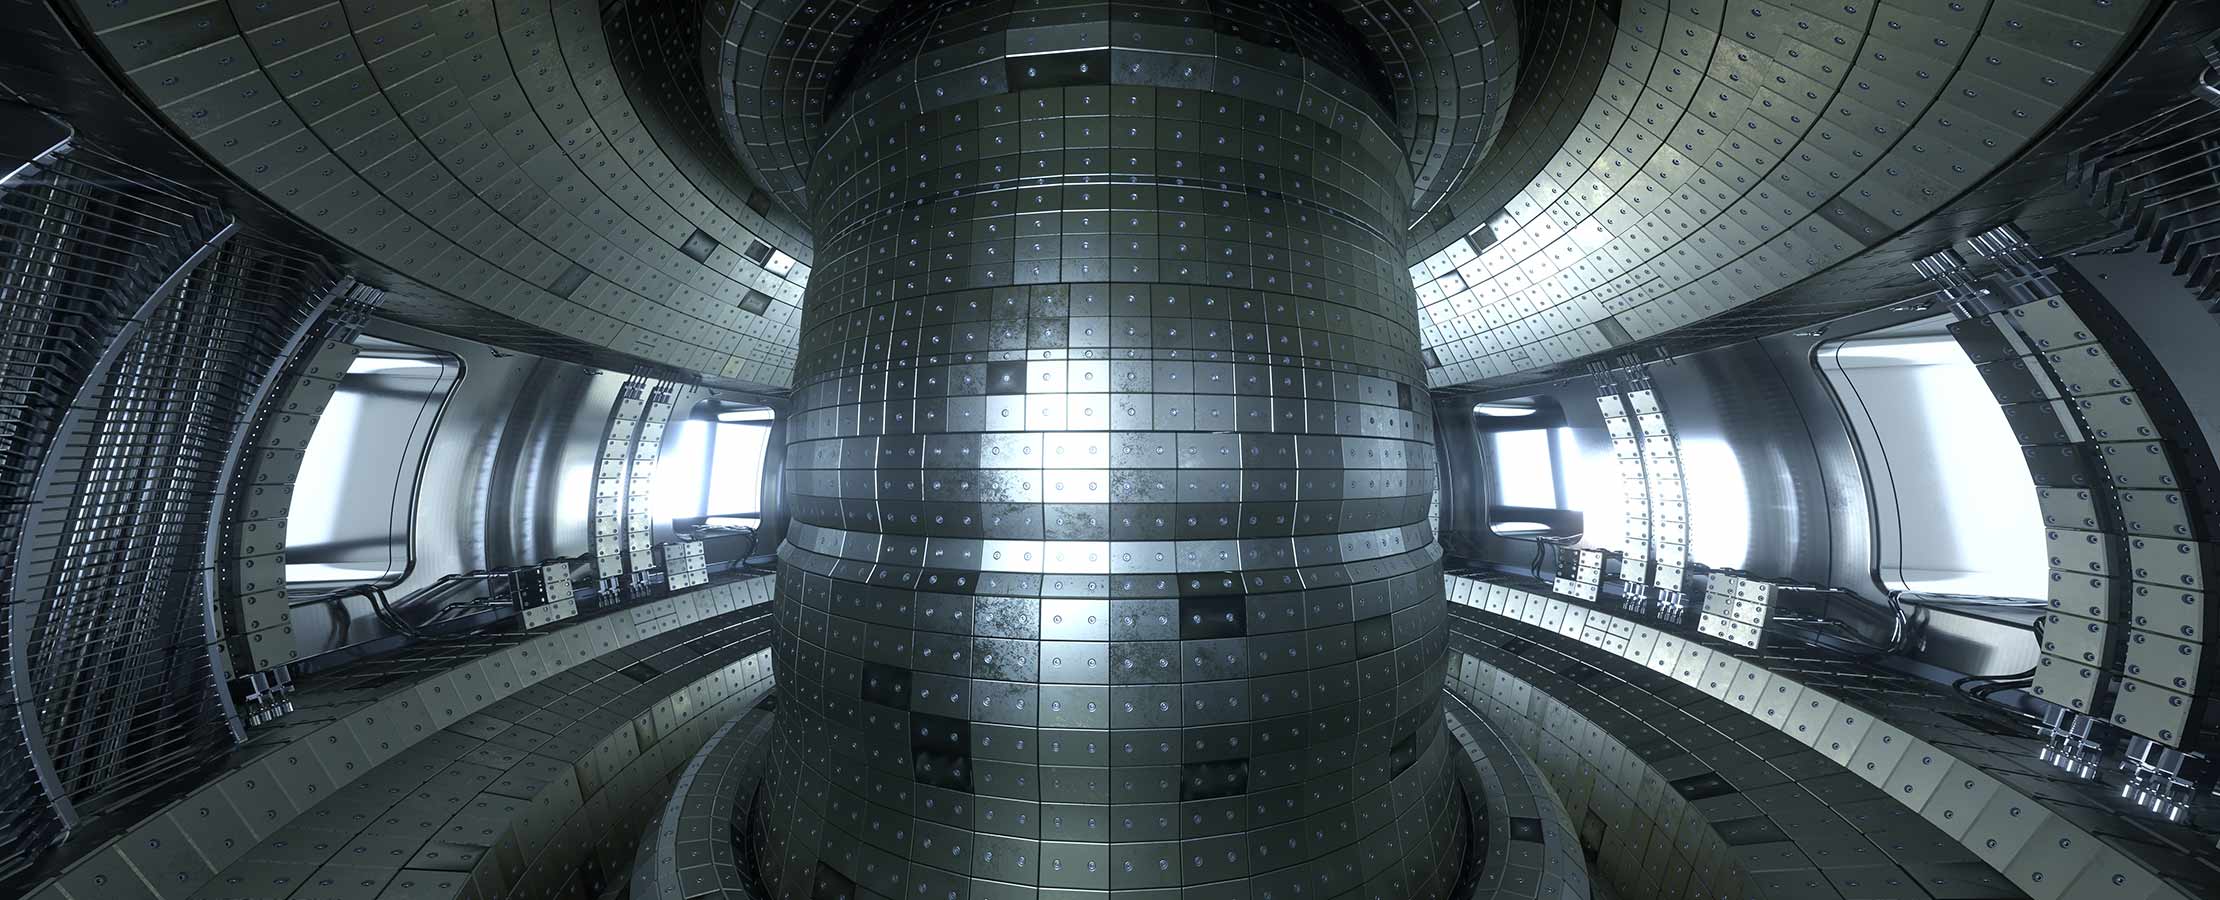 inside fusion reactor